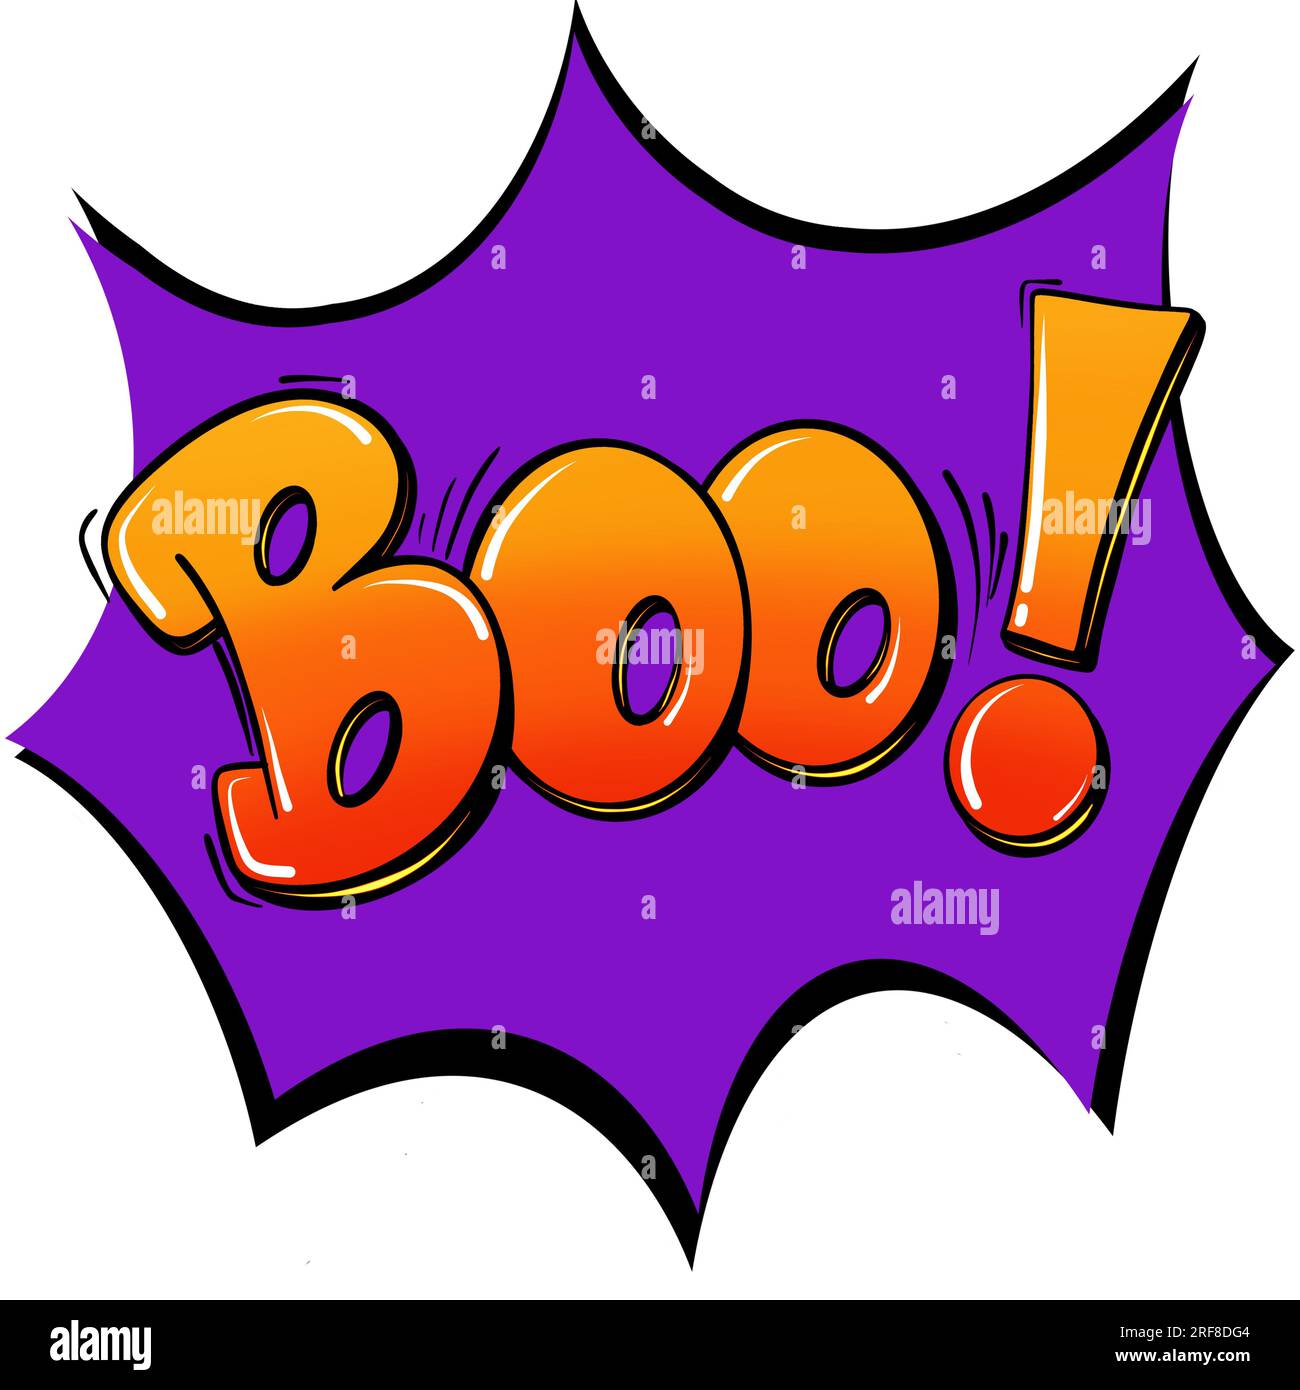 https://c8.alamy.com/comp/2RF8DG4/halloween-clip-art-illustration-with-the-word-boo-in-yellow-orange-lettering-on-purple-background-2RF8DG4.jpg